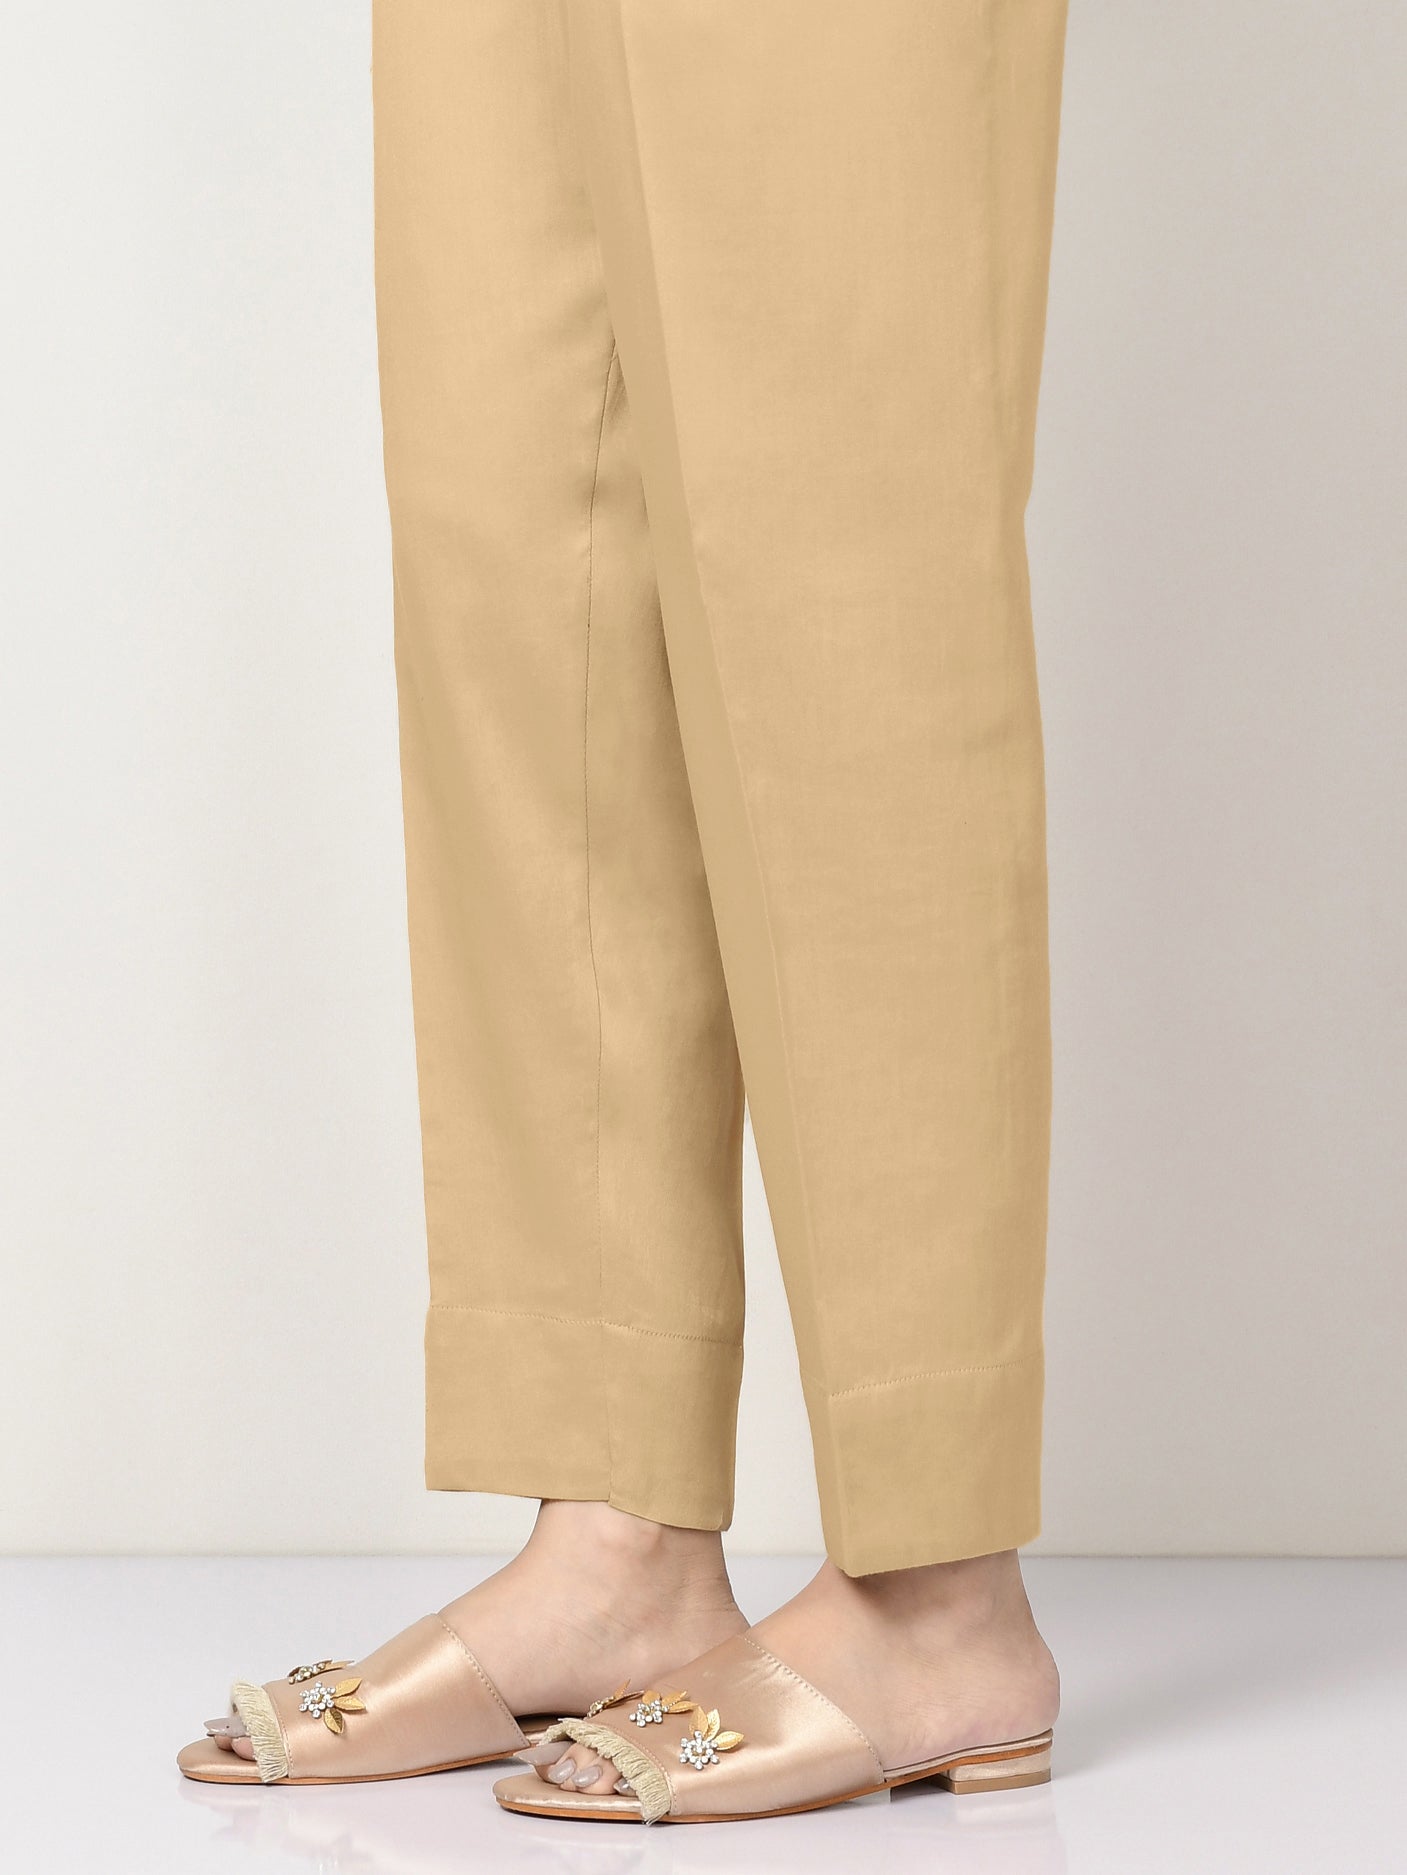 dyed-khaddar-trouser(pret)